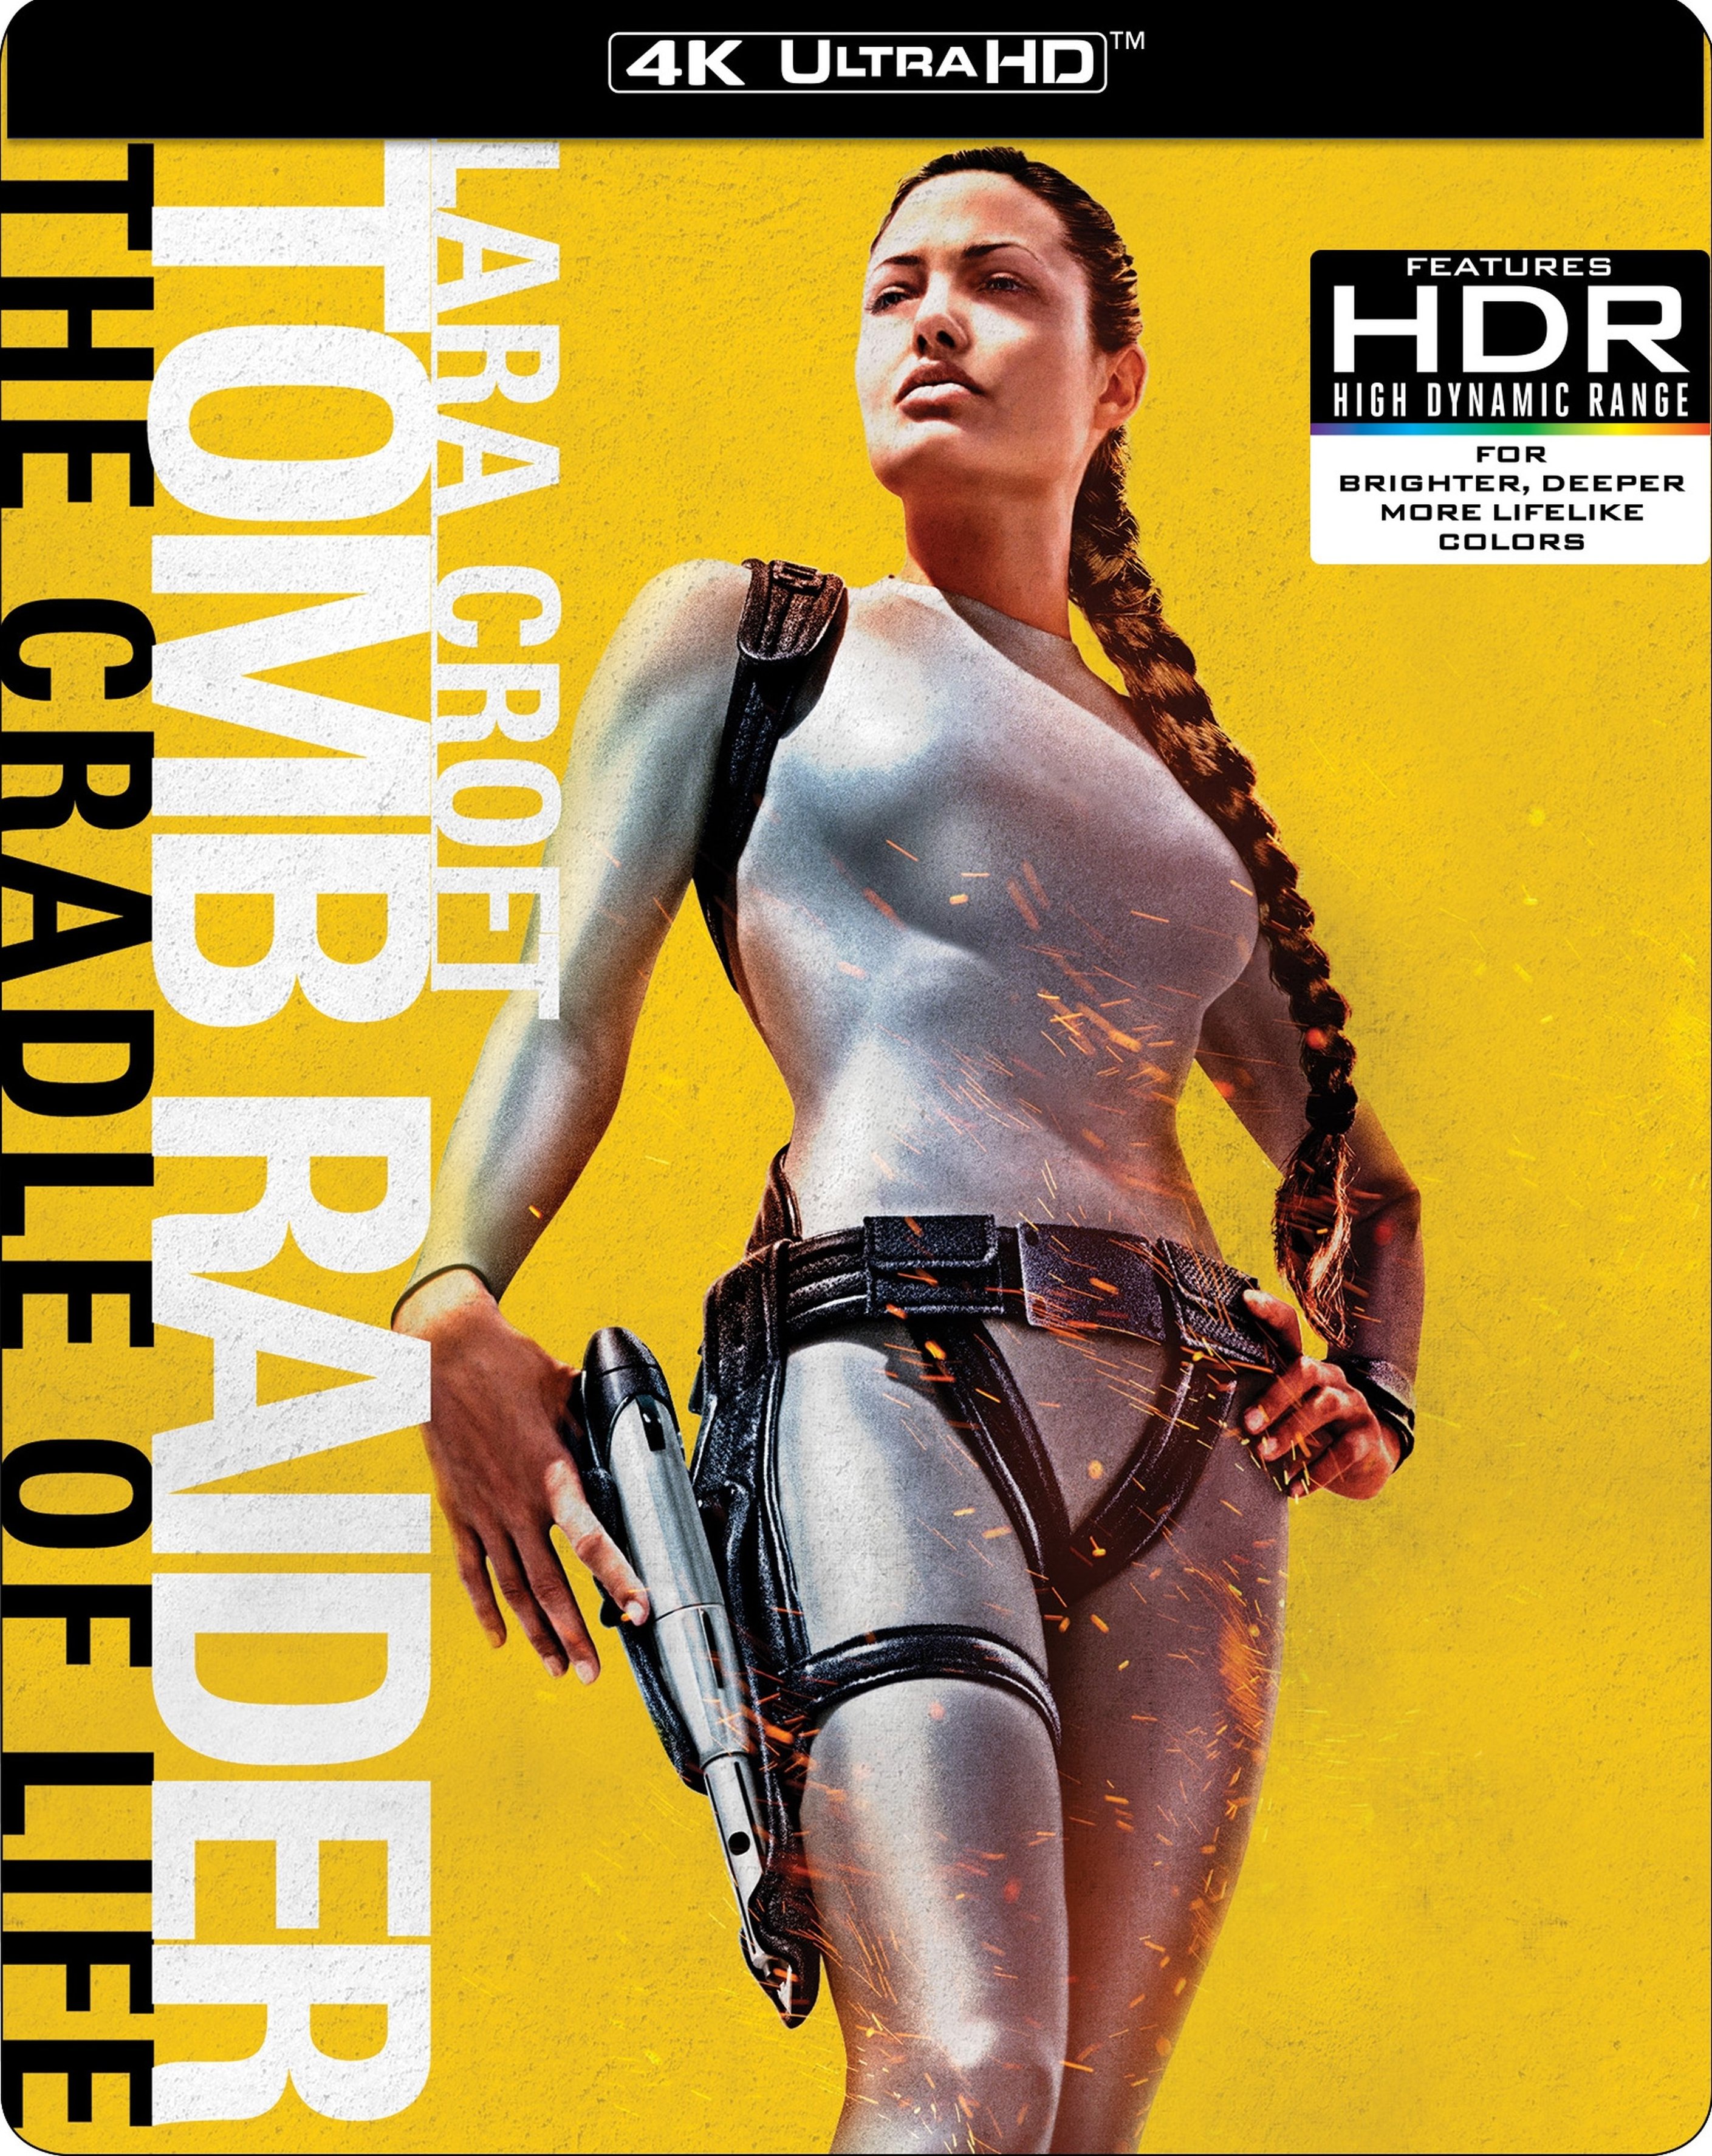 Lara Croft Tomb Raider: The Cradle of Life (2003) movie posters